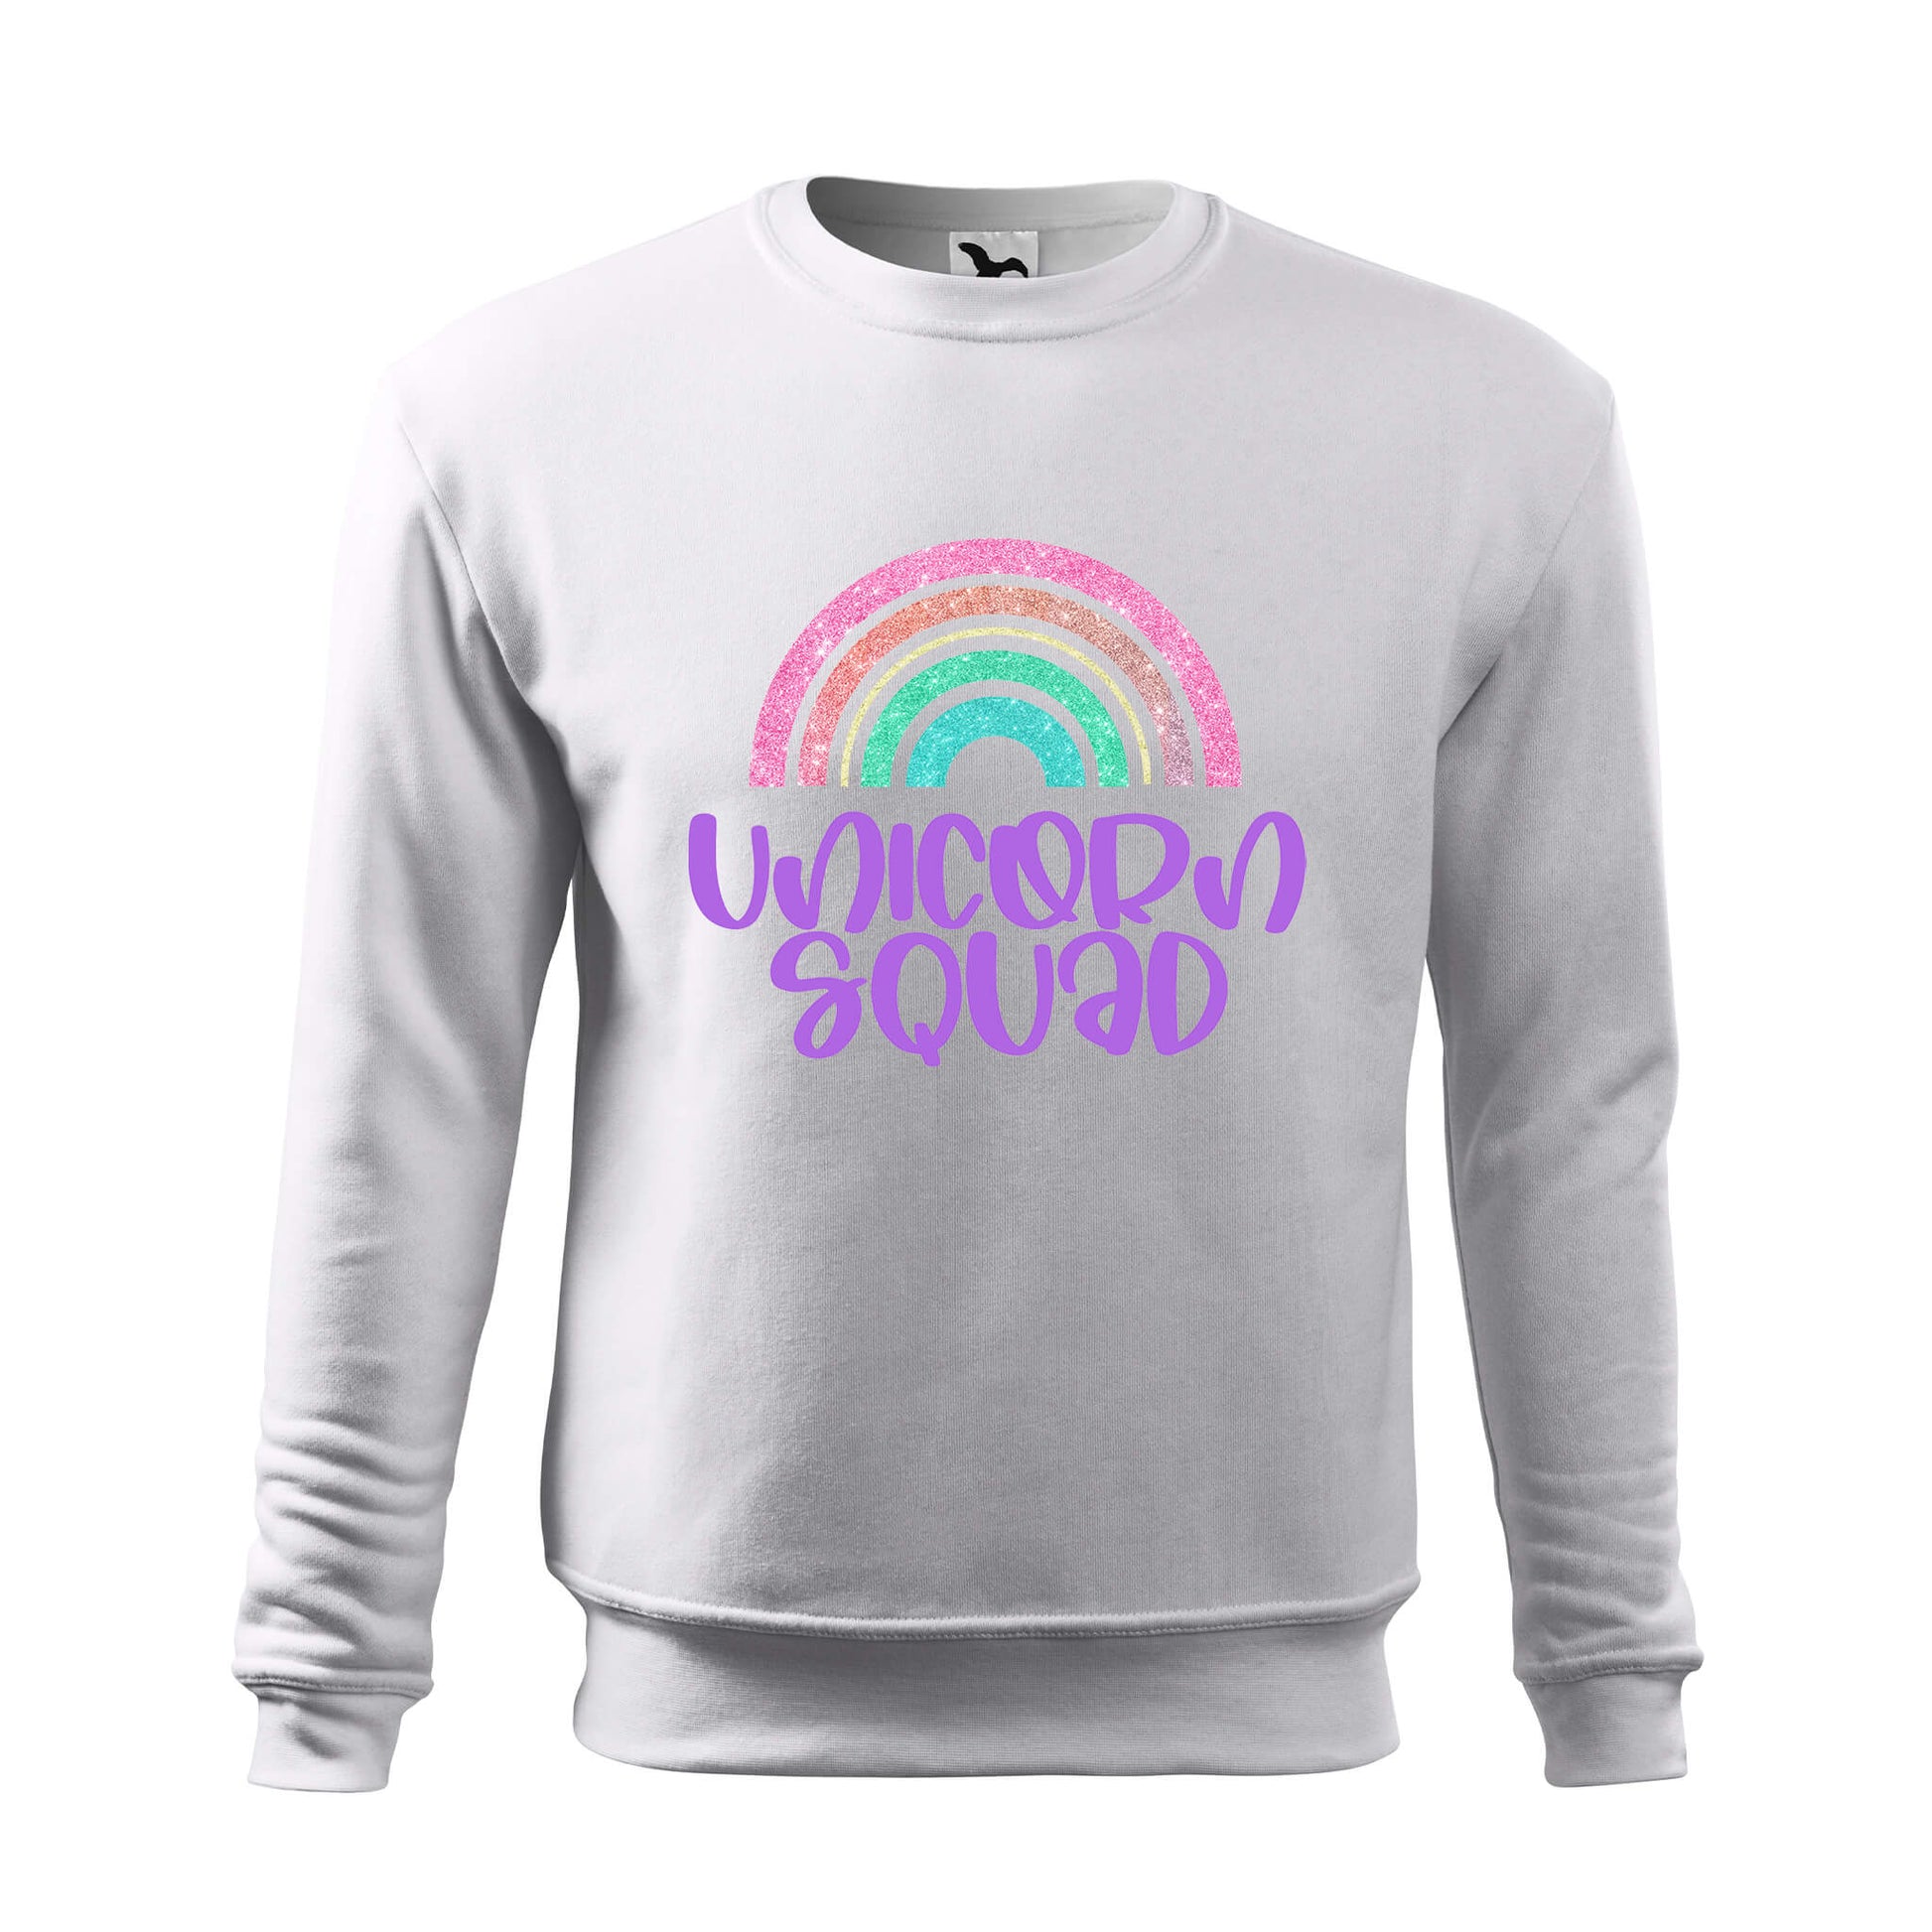 Unicorn squad sweatshirt - rvdesignprint